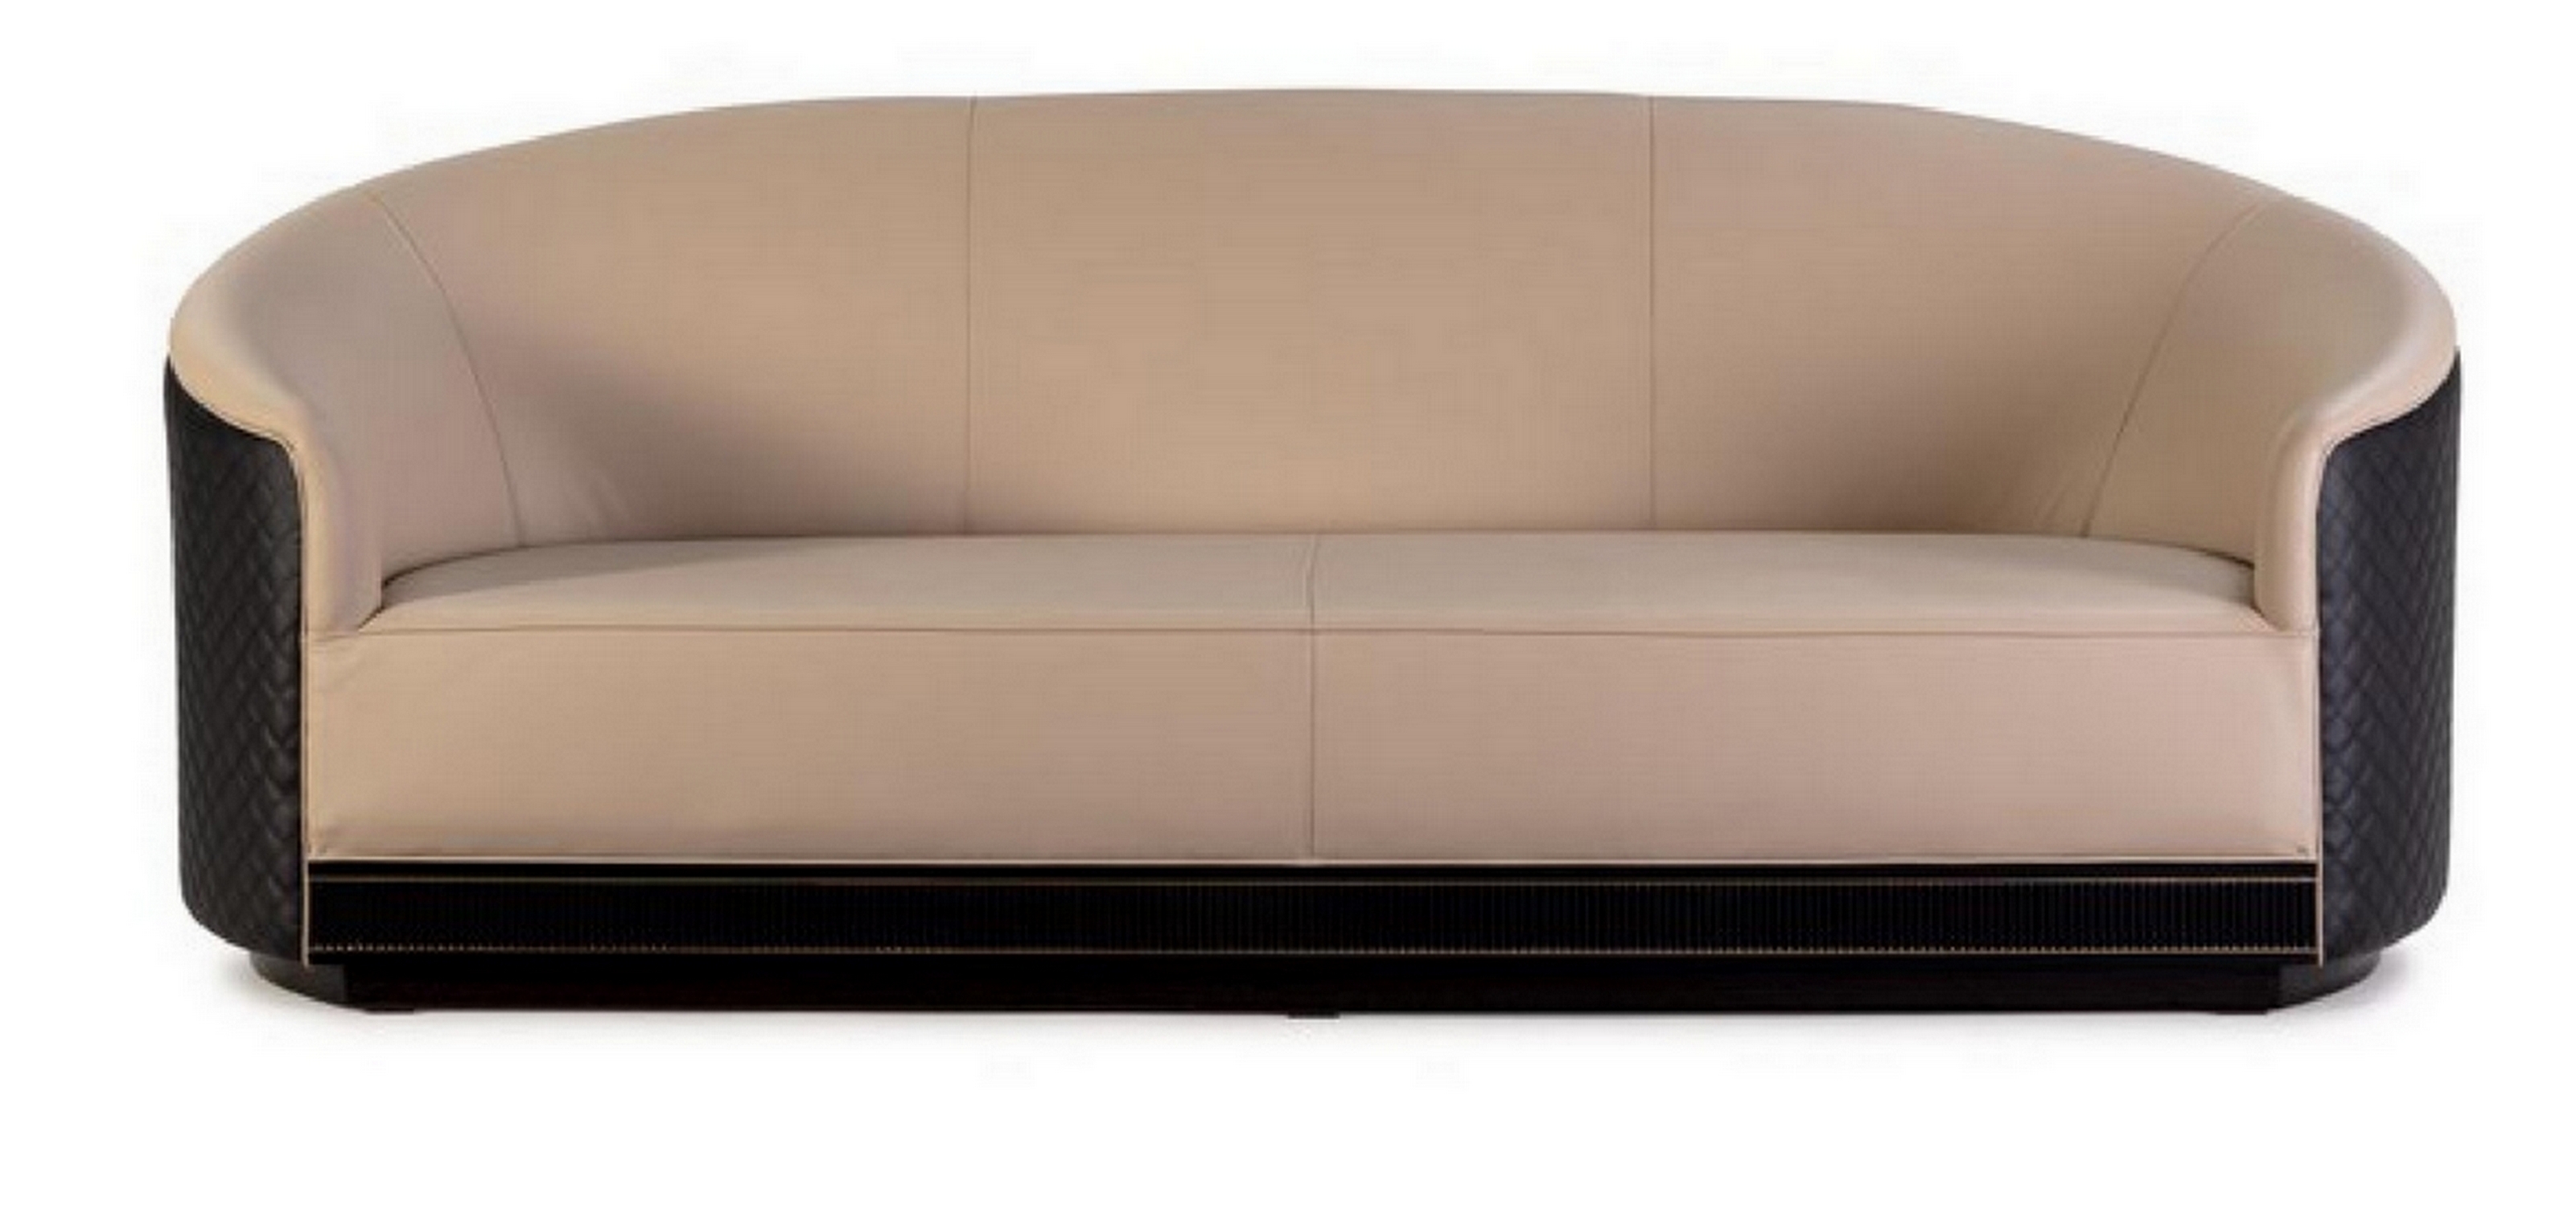 Ref Luxuru artdeco sofa